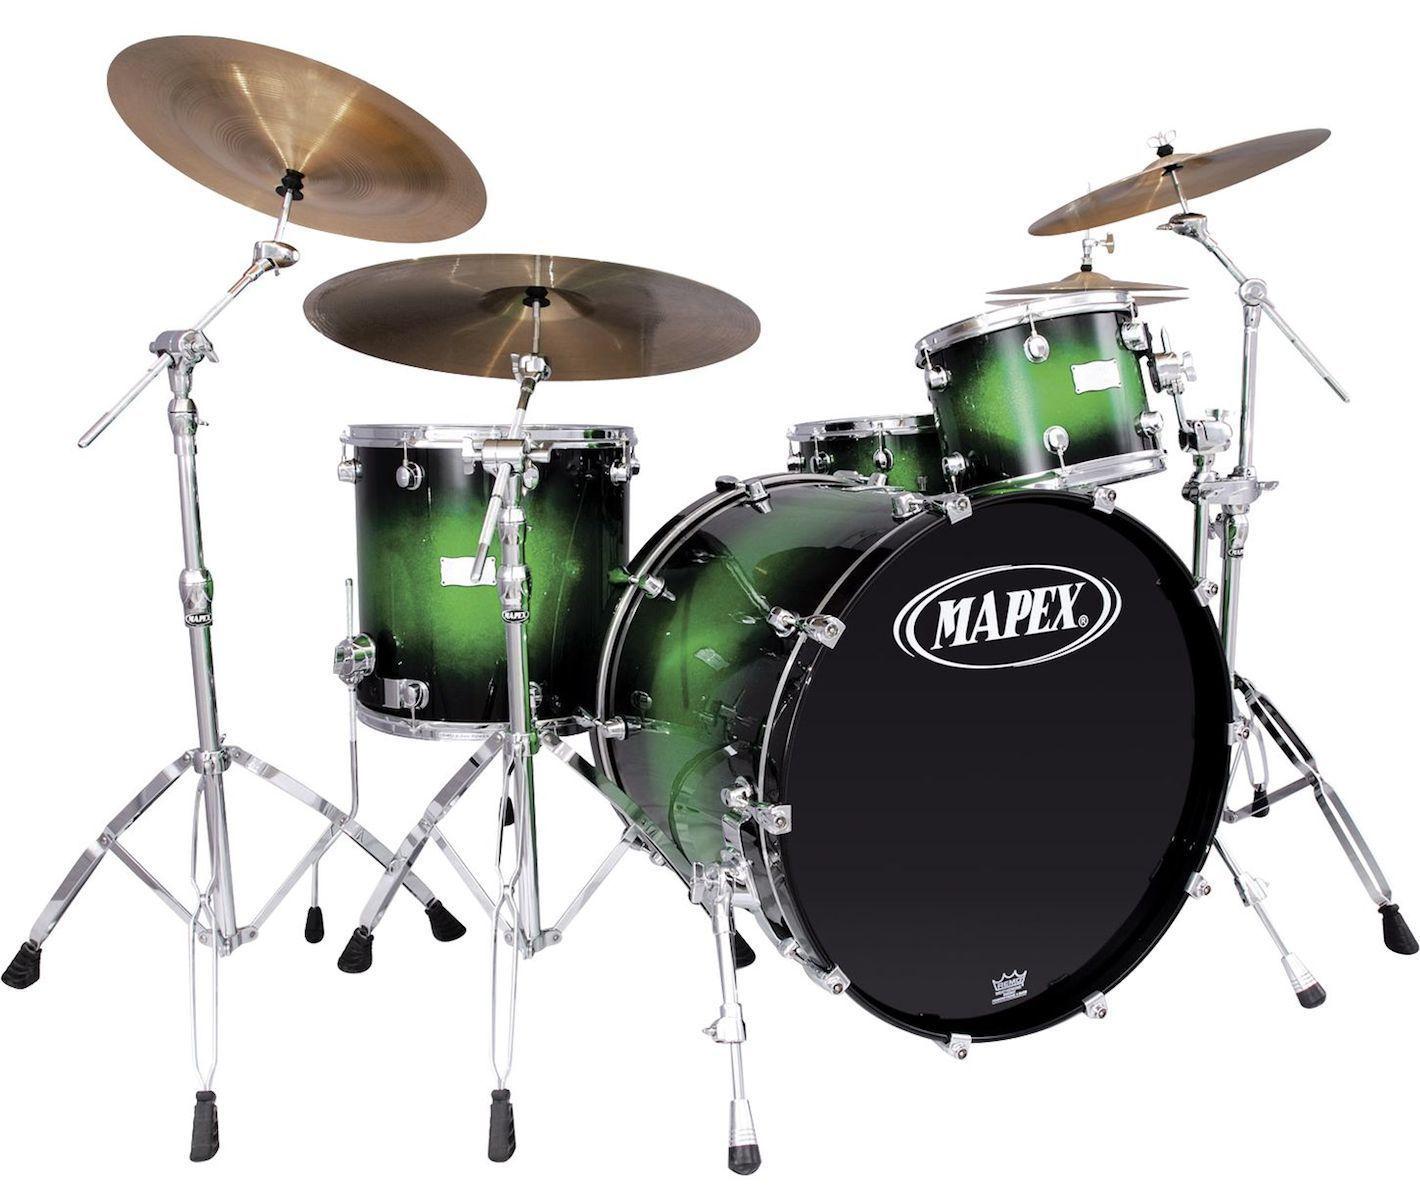 Fascinating Drum Set Mapex Green HD Wallpaper 1420x1200PX Drum